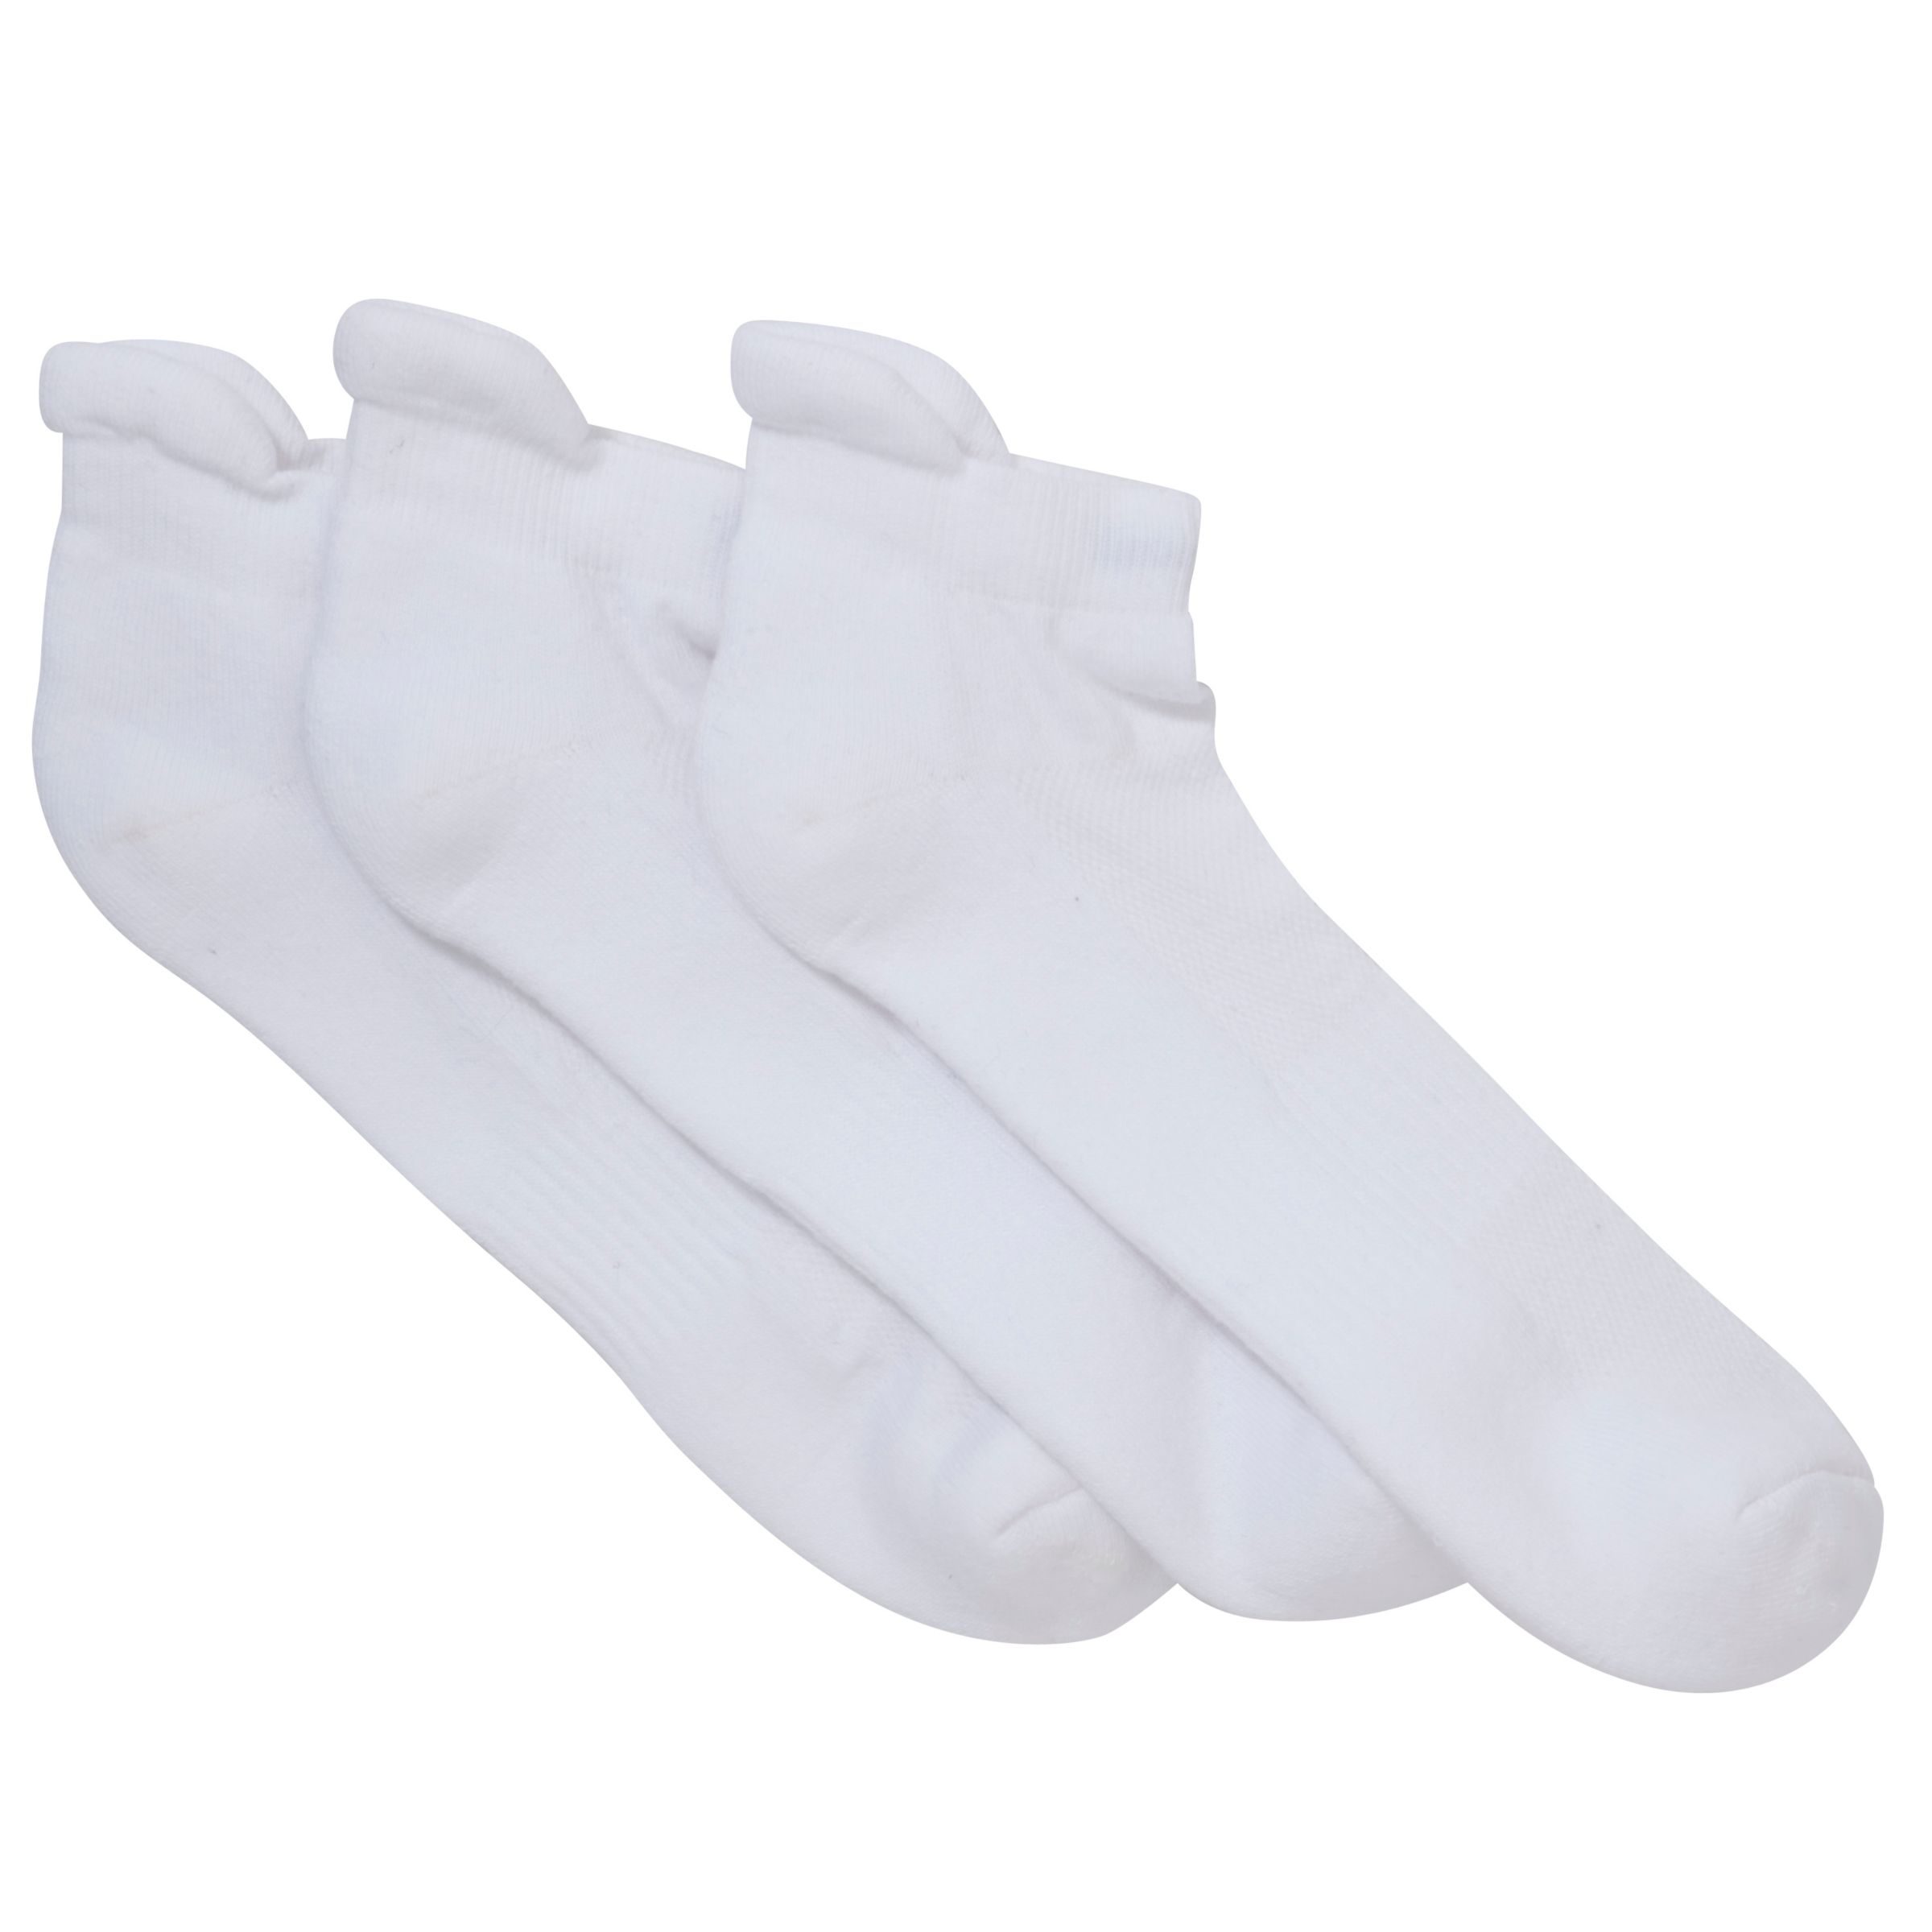 John Lewis & Partners Ankle Socks, Pack of 3